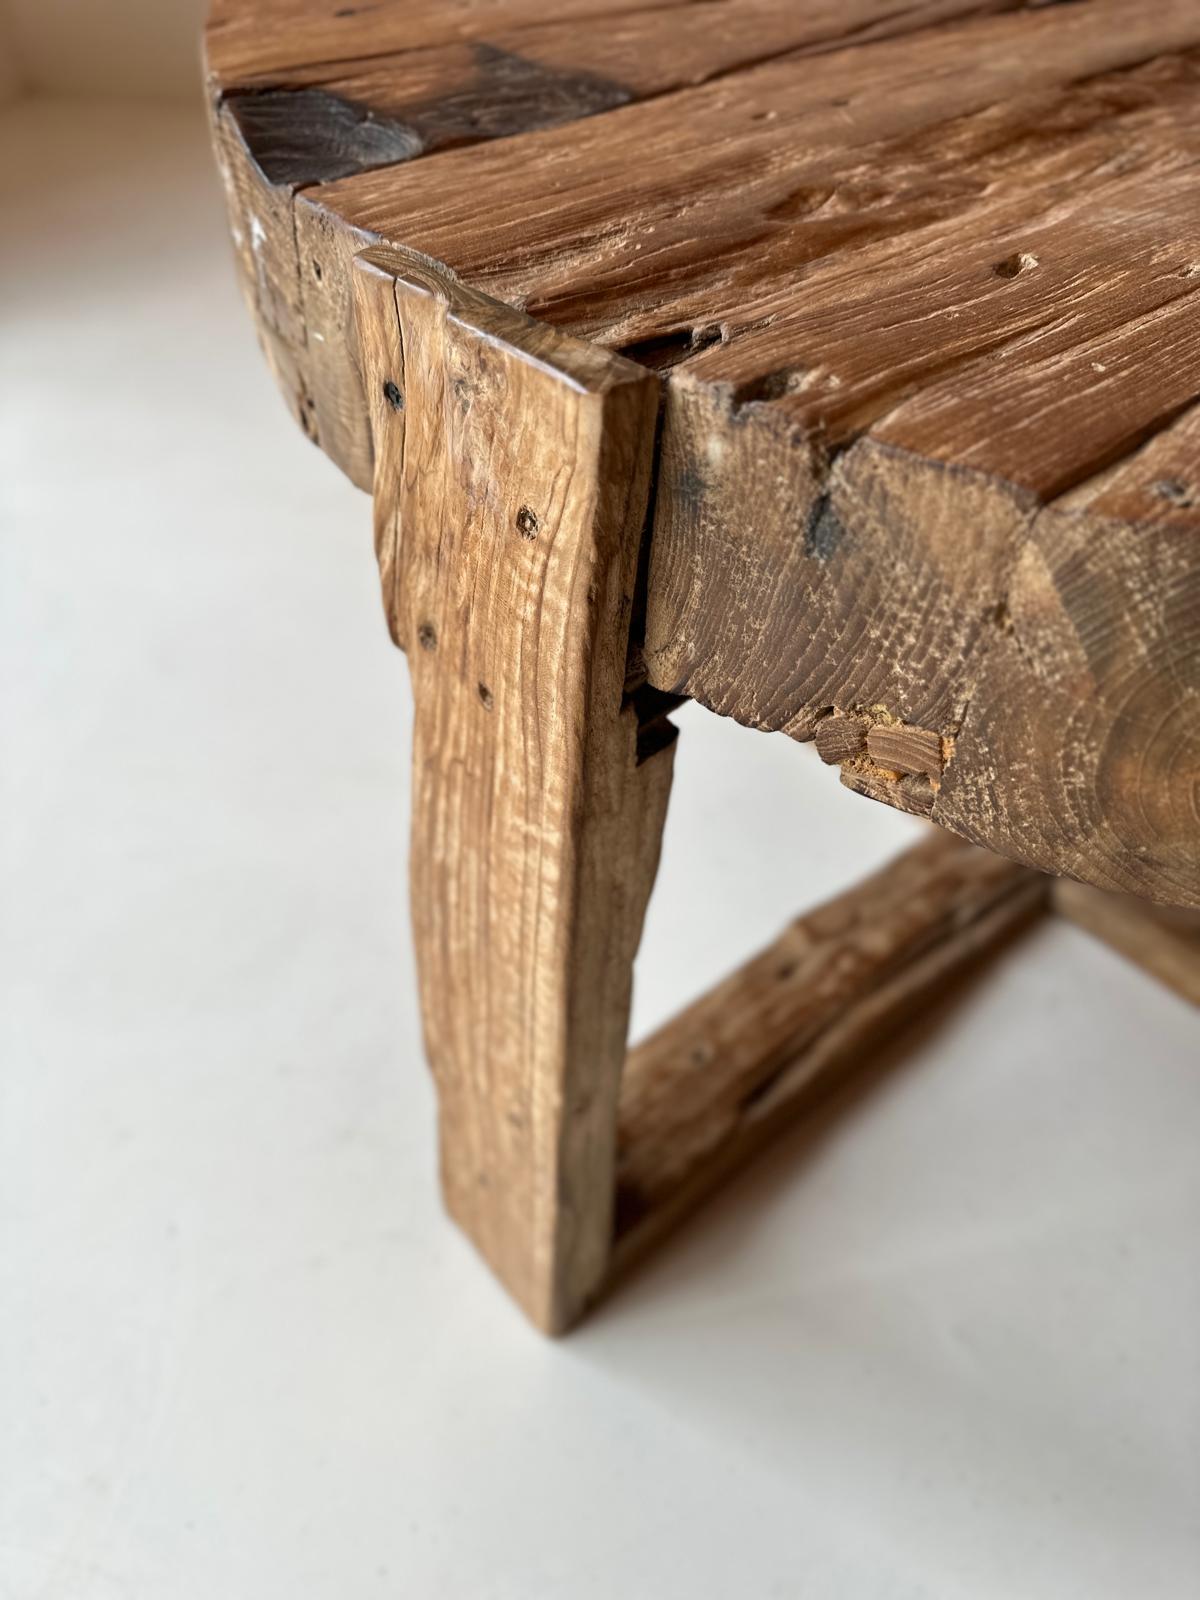 Ibuki unique find : Rustic Wooden coffee table vintage piece